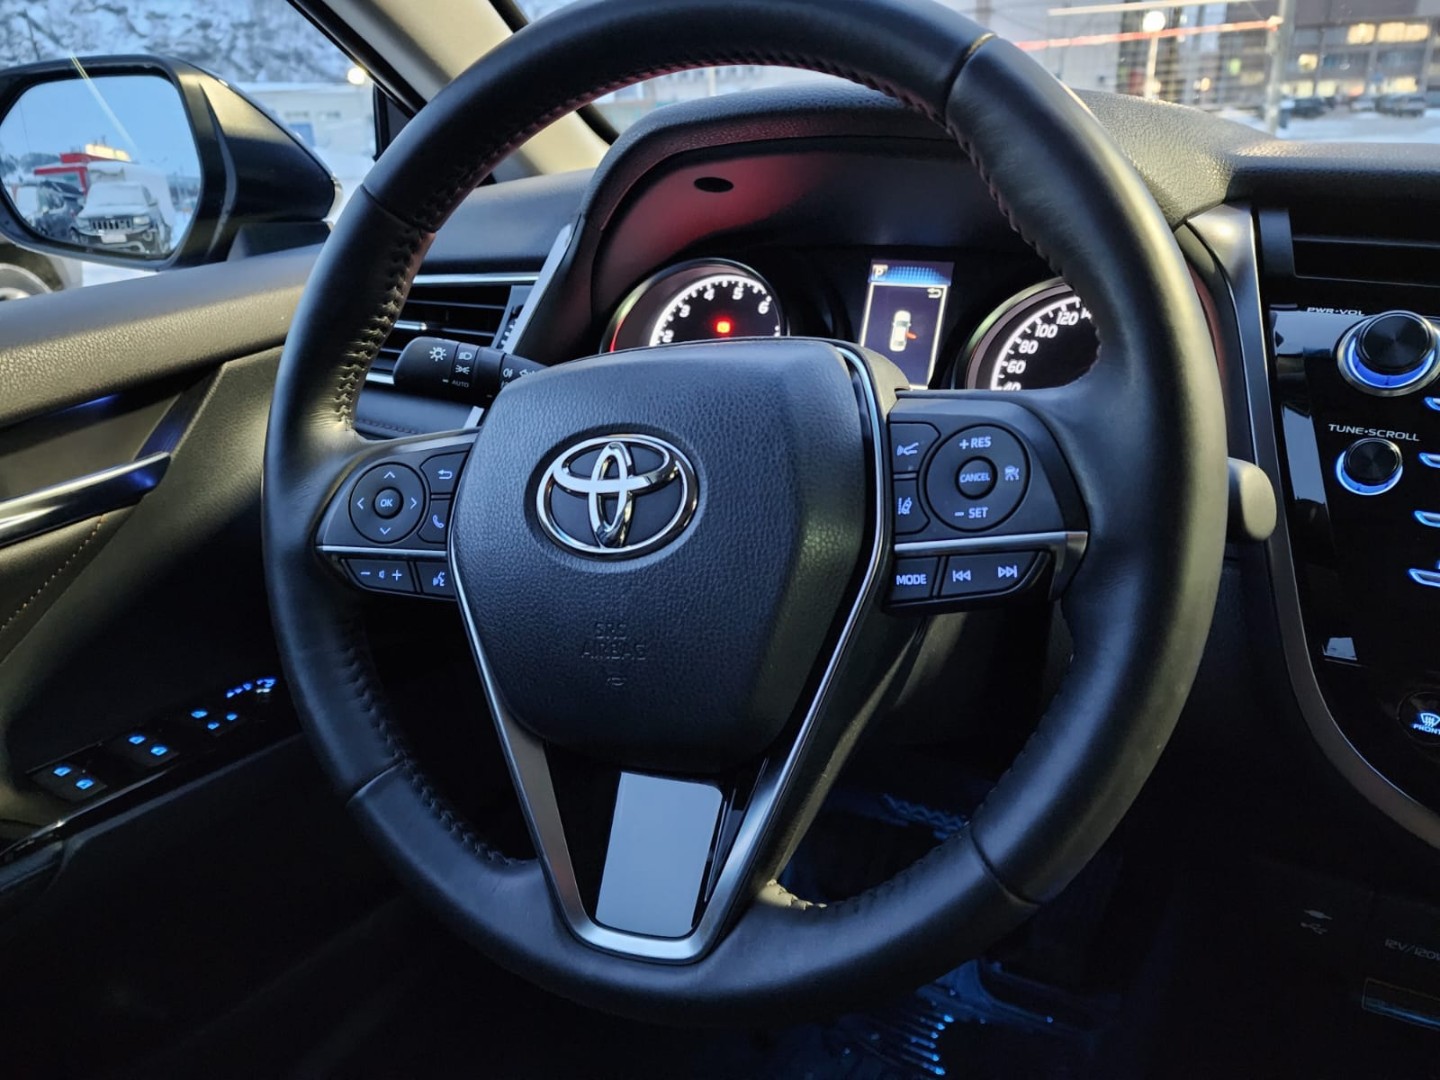 Toyota Camry, 2021 г.в., пробег 5 770 км, цена, фото, Мурманск